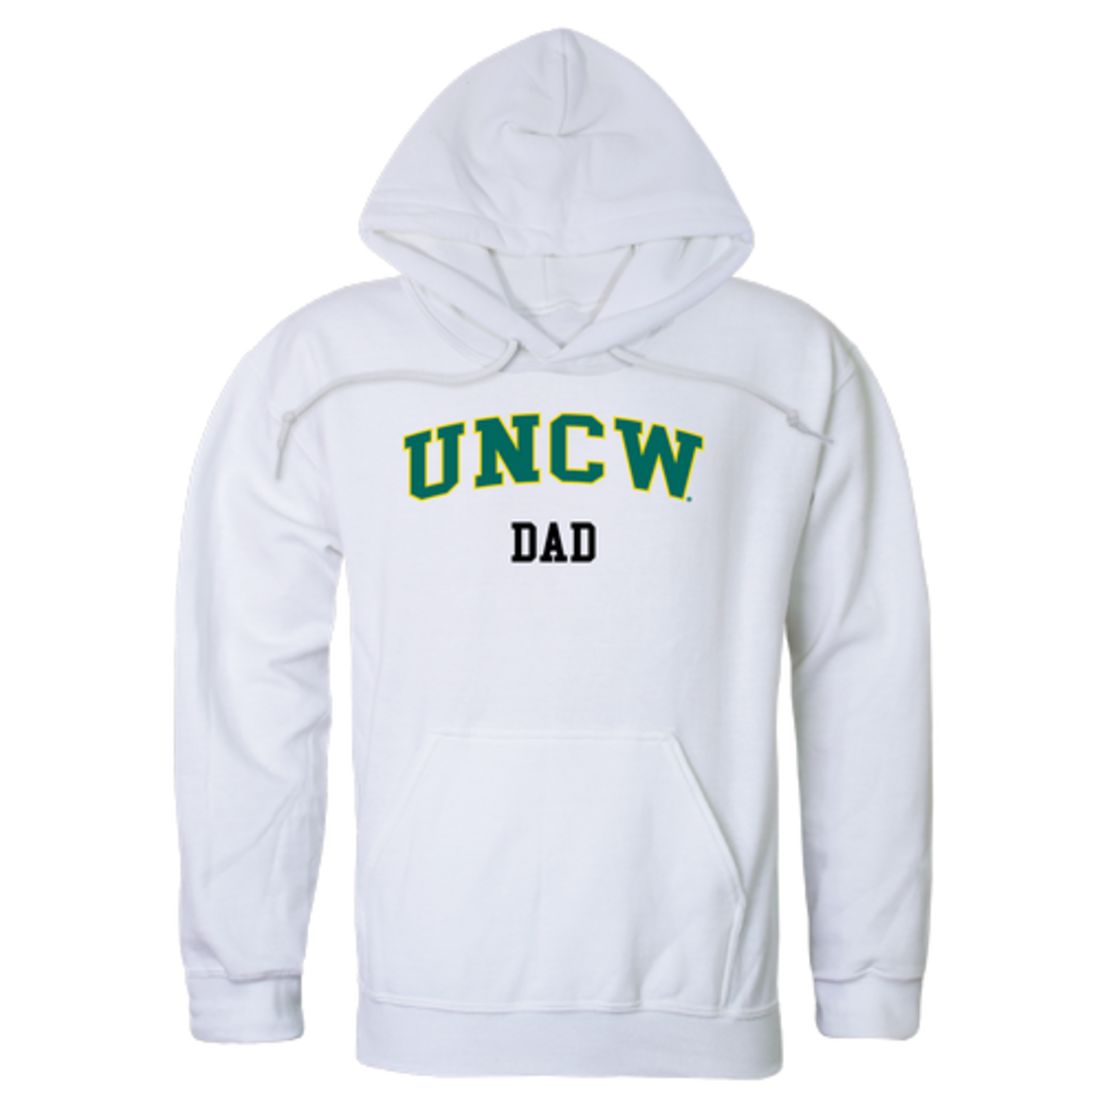 UNCW University of North Carolina Wilmington Seahawks Dad Fleece Hoodie Sweatshirts Heather Charcoal-Campus-Wardrobe